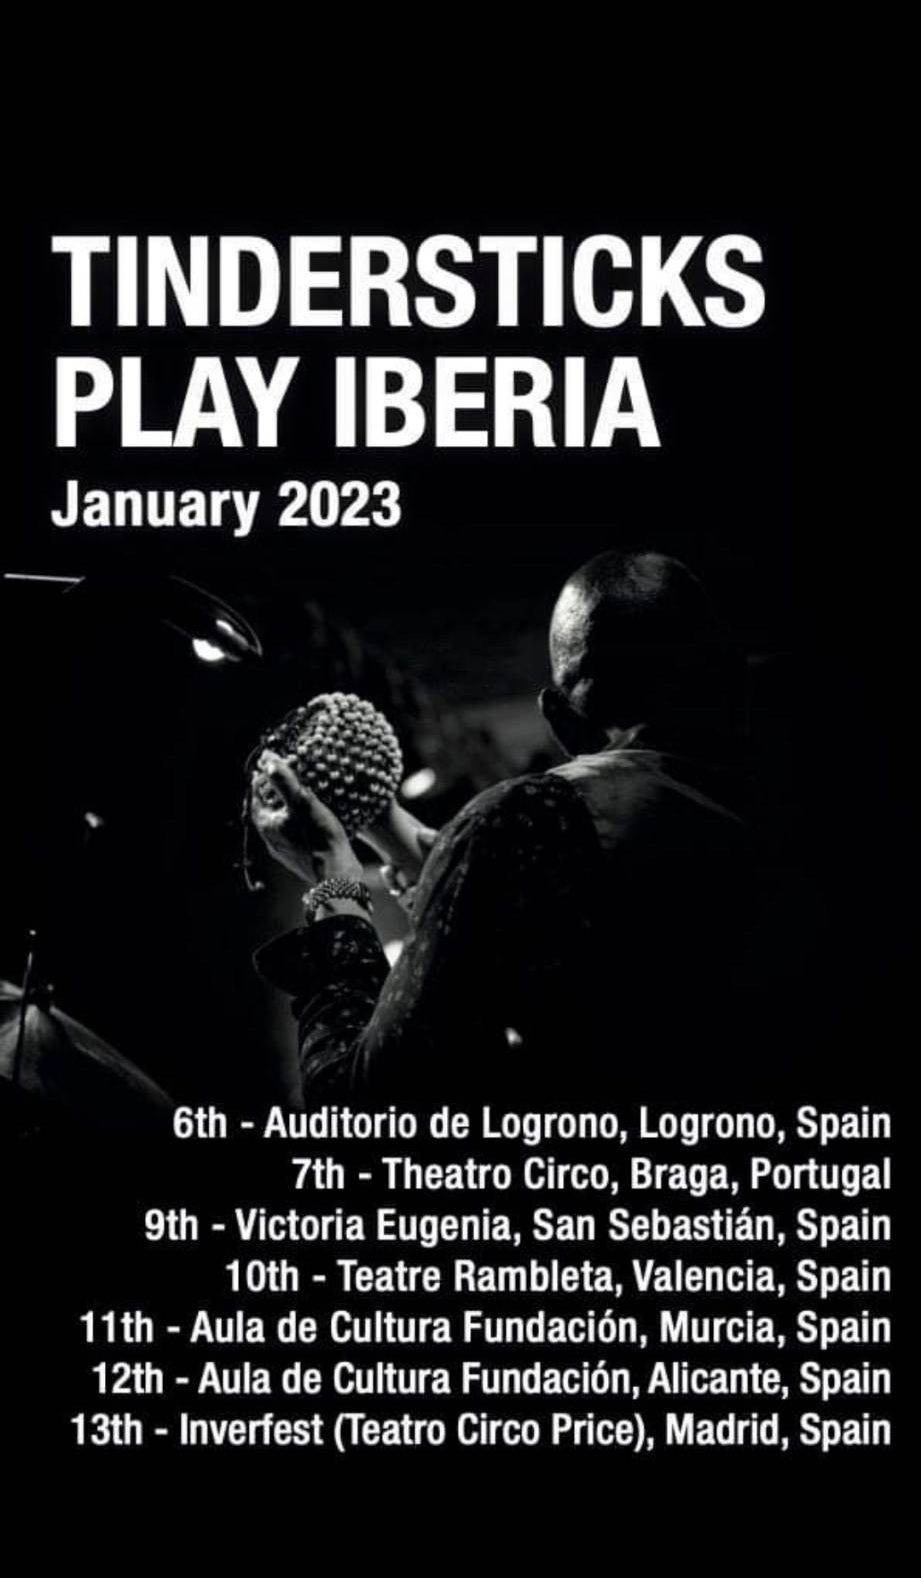 Tindersticks Play Iberia 2023